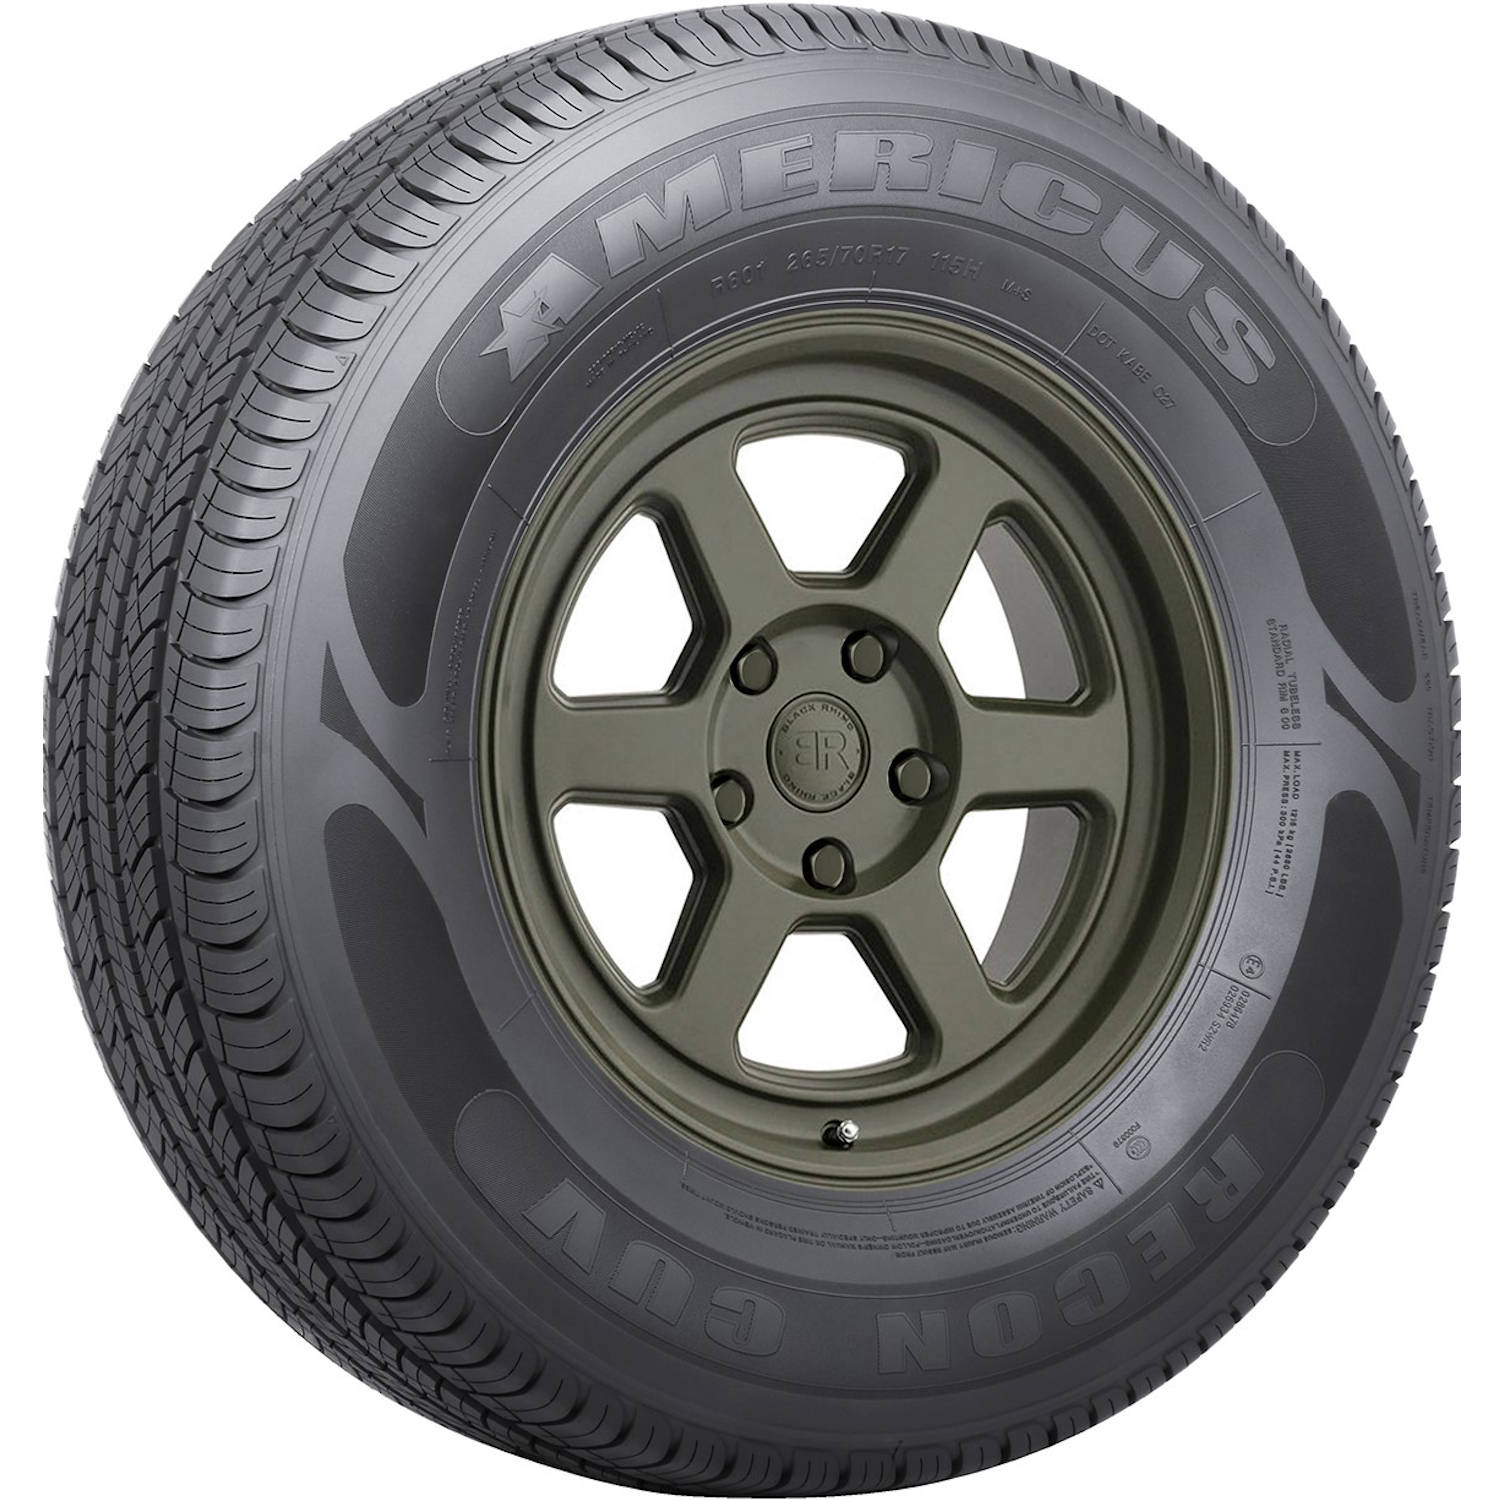 AMERICUS RECON CUV 275/60R20 (33X10.8R 20) Tires